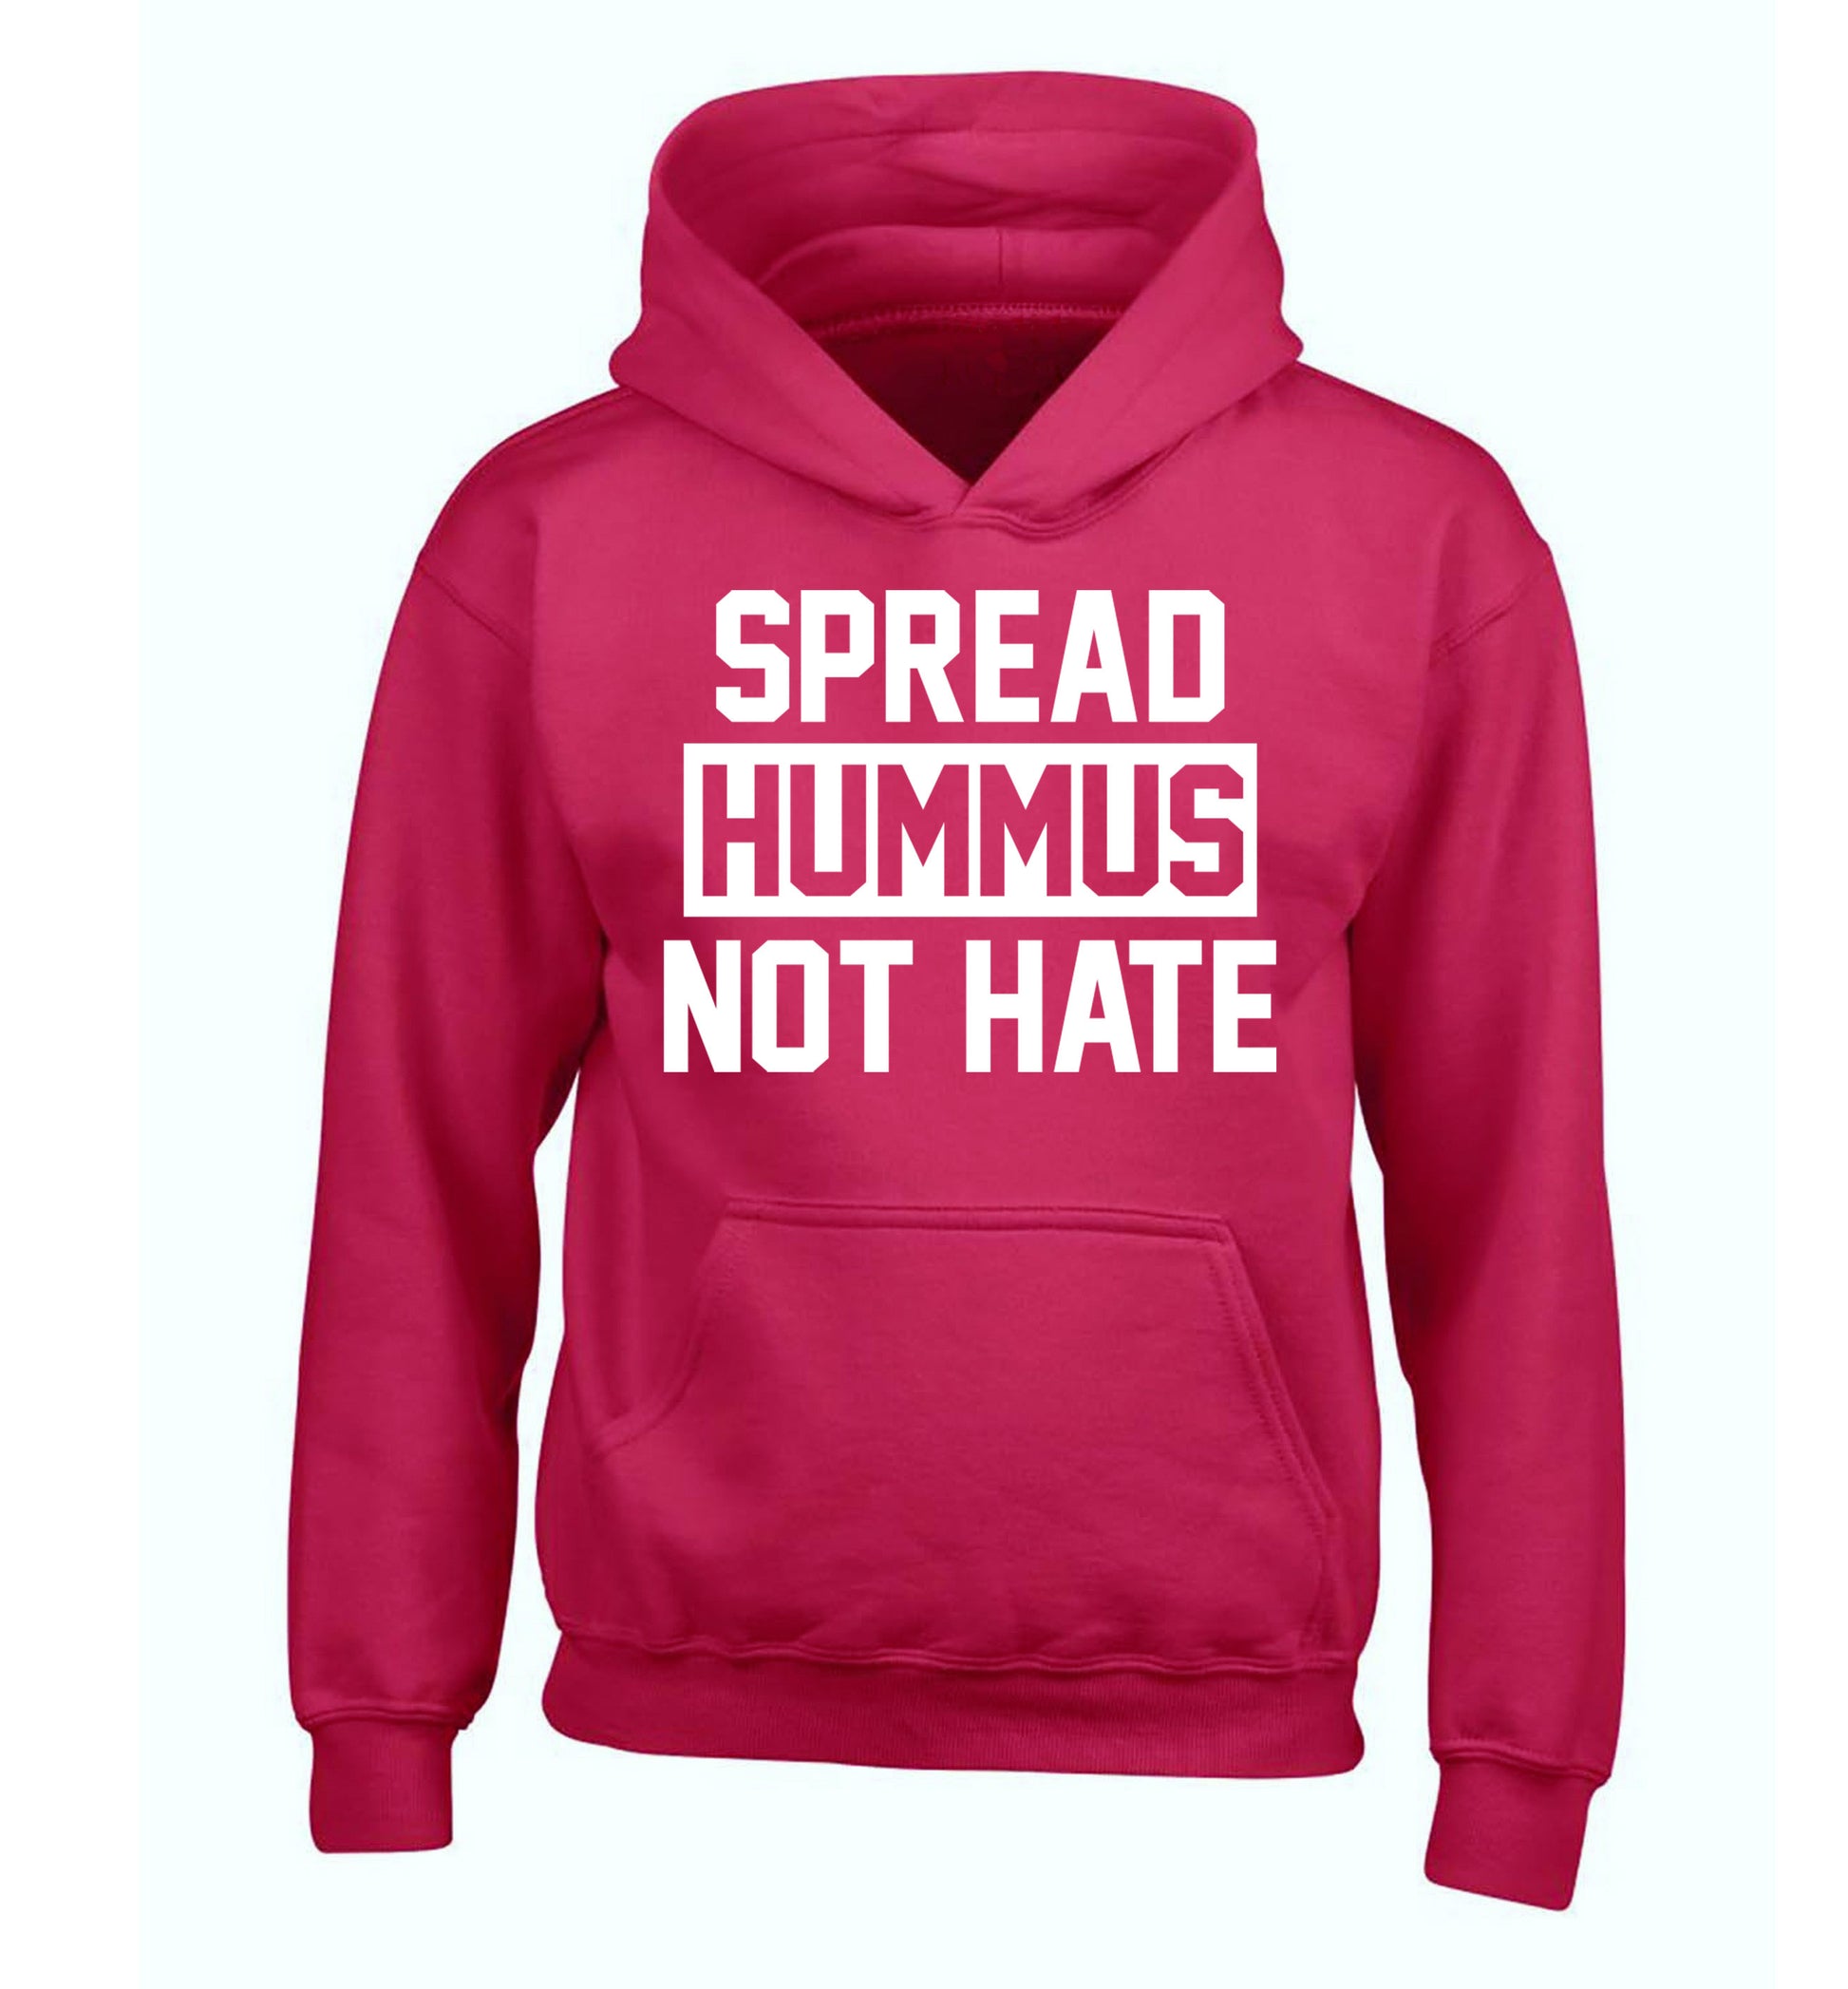 Spread hummus not hate children's pink hoodie 12-14 Years